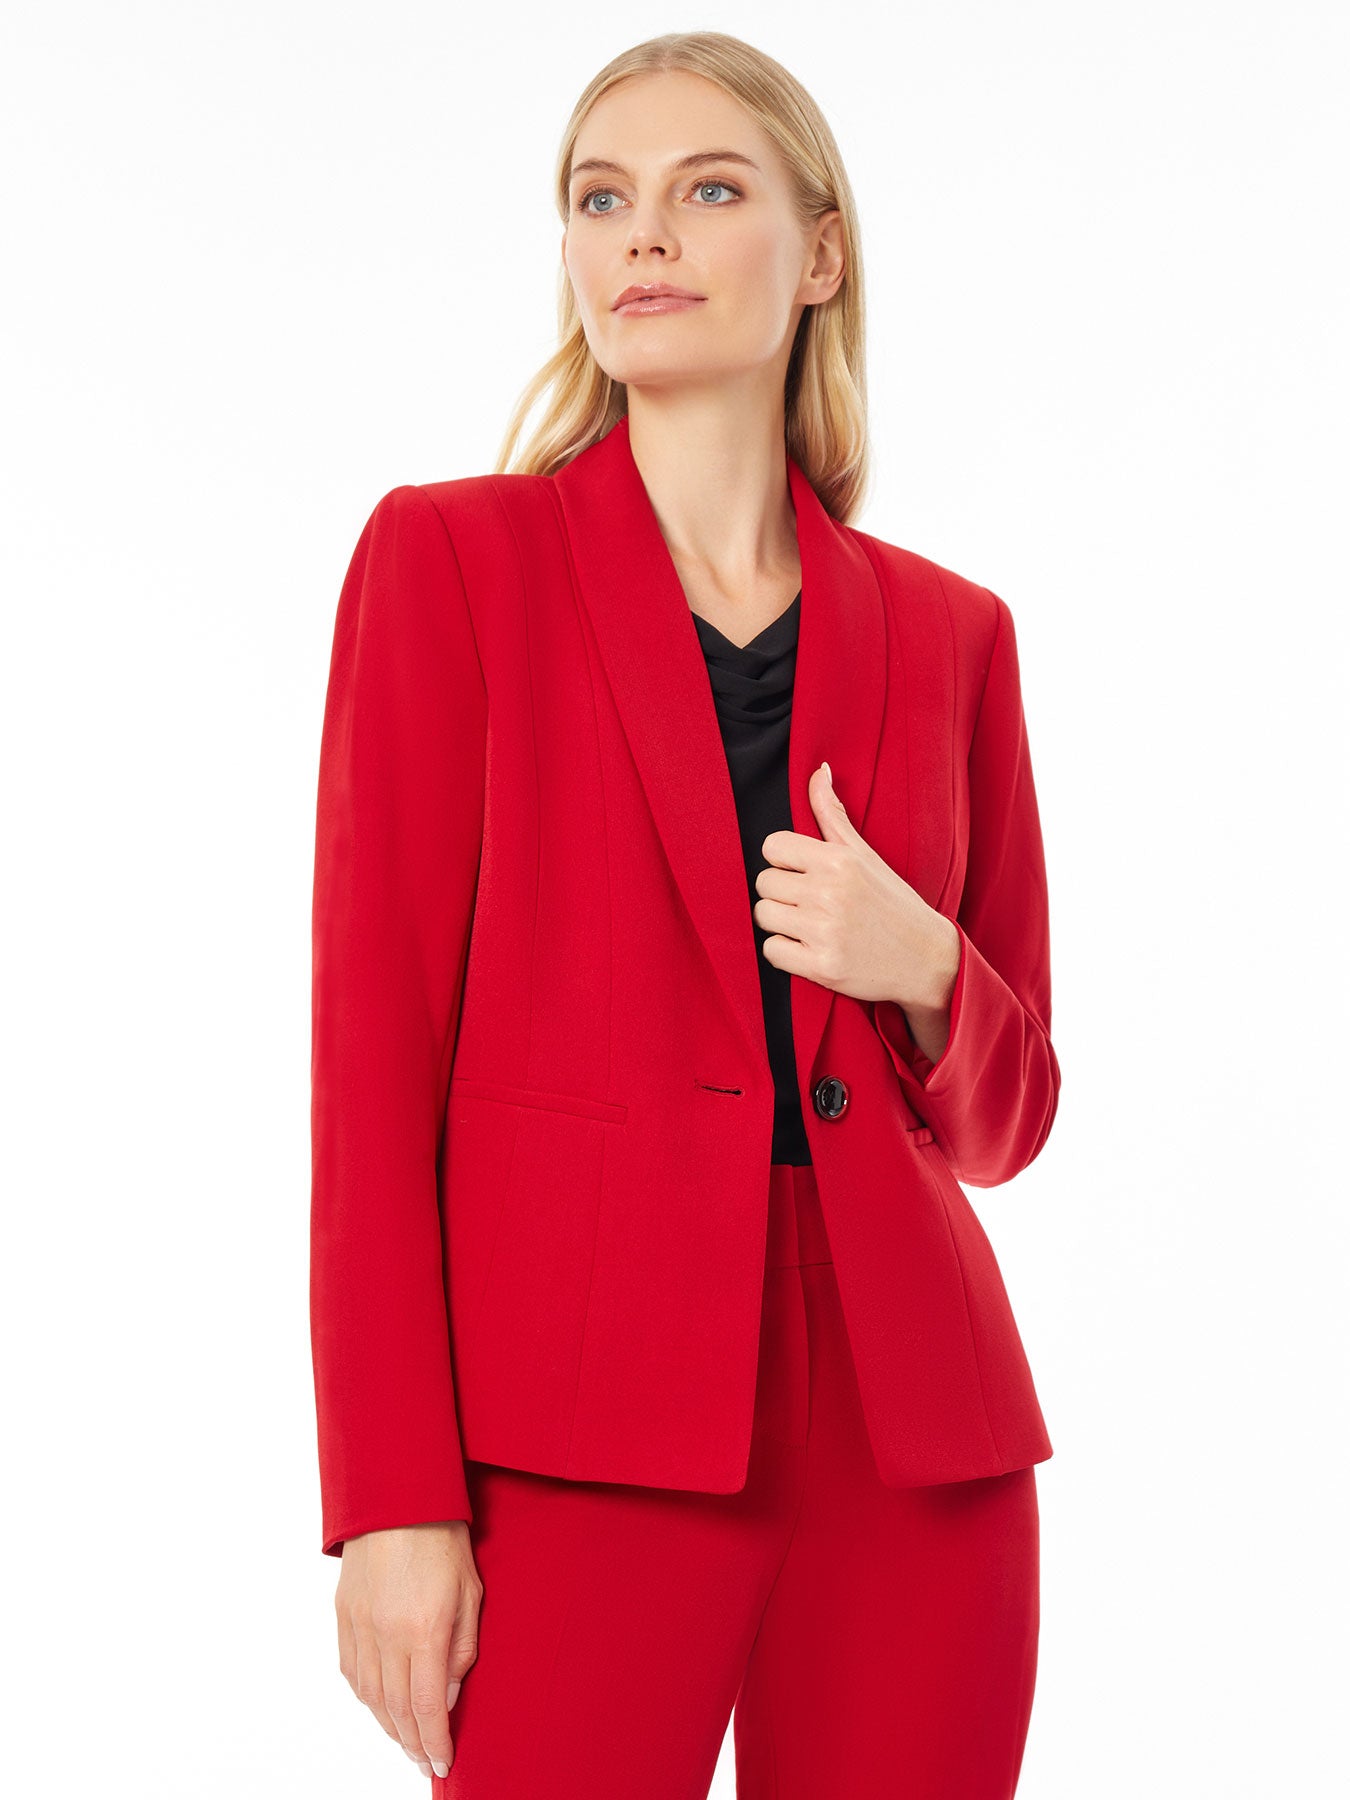 $100 Kasper Women's Pink Shawl-Collar Open-Front Blazer Jacket Petite Size  PM